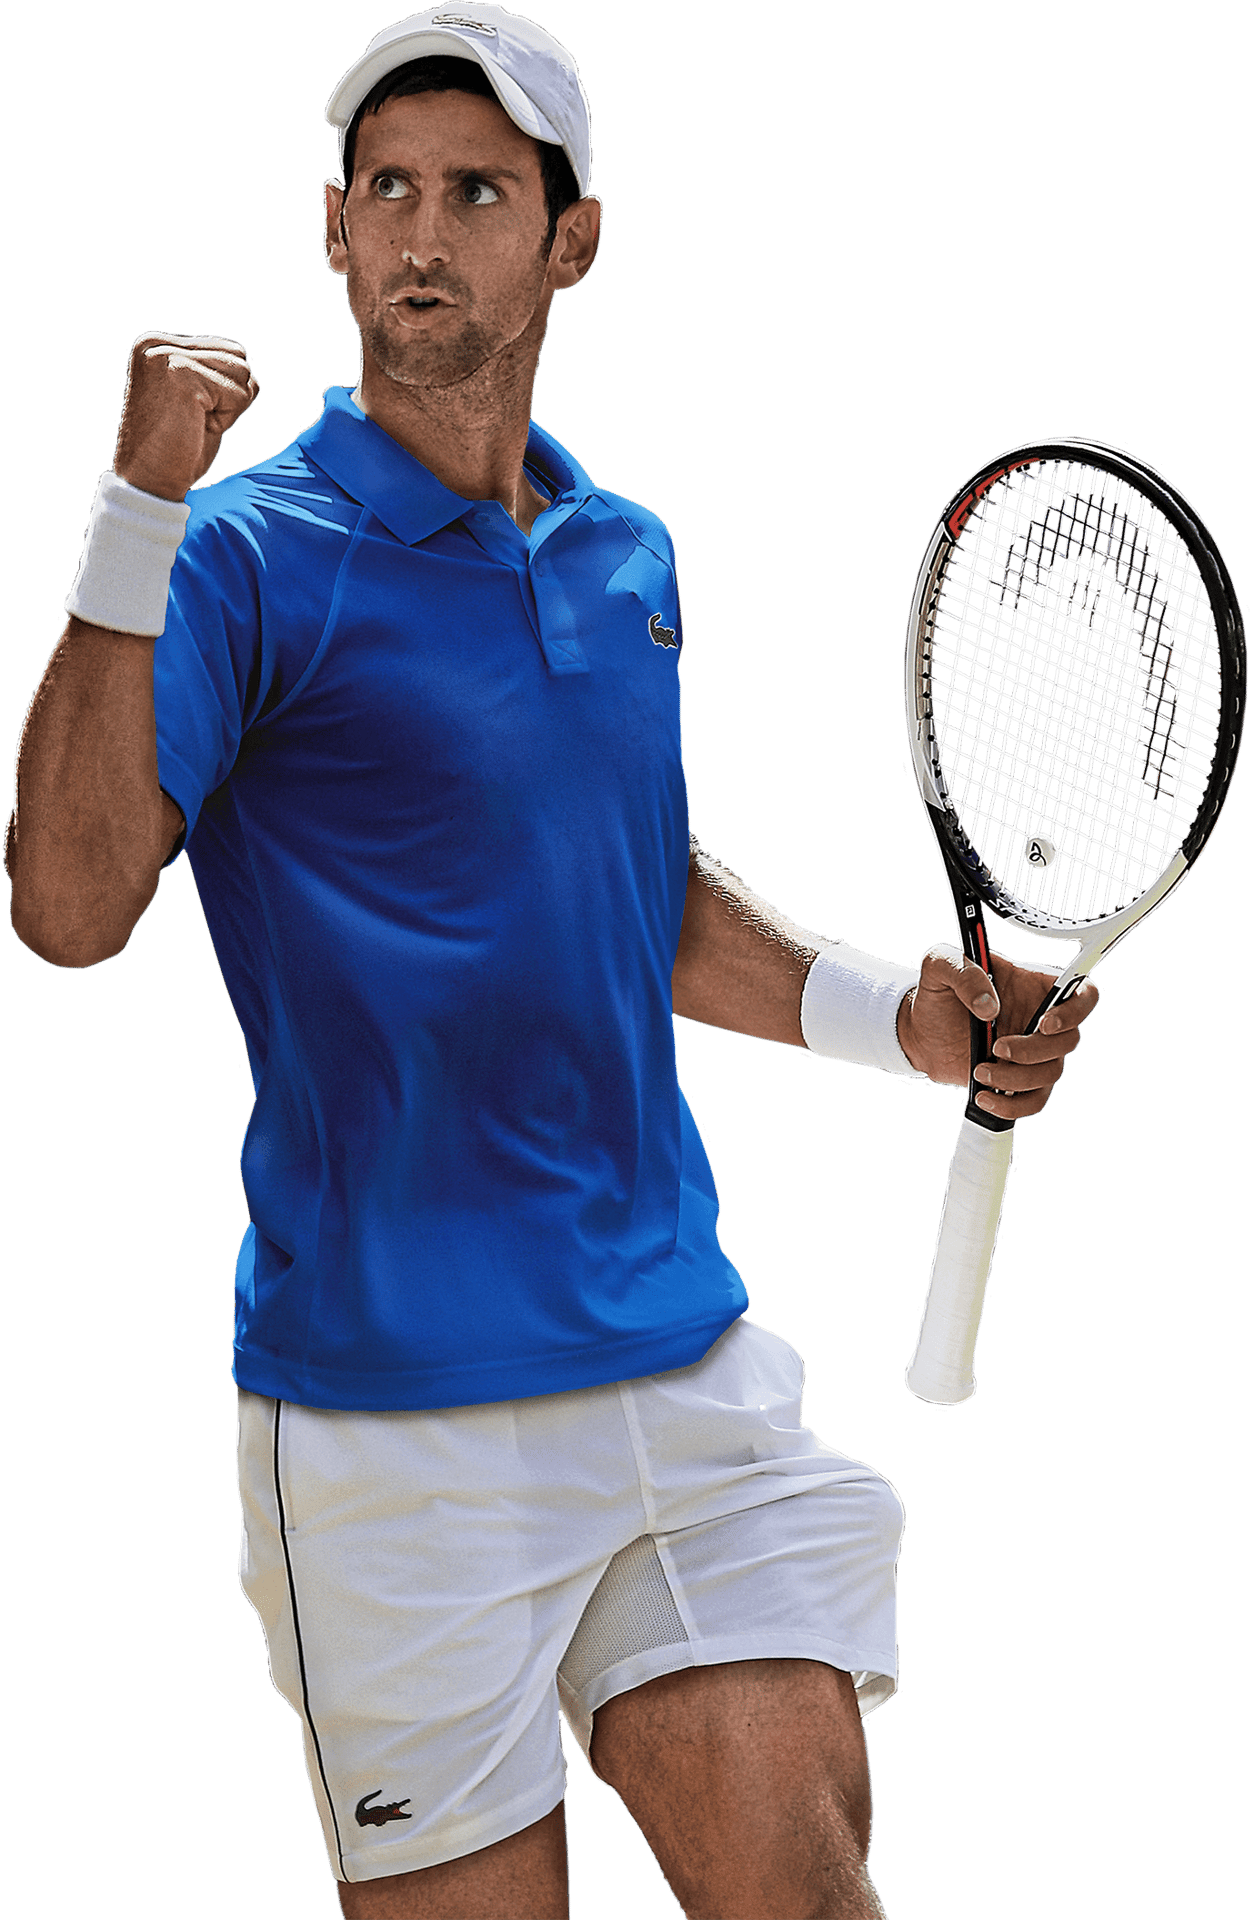 Sports equipment, Tennis racket, Clothing, Face, Head, Arm, Racketlon, Strings